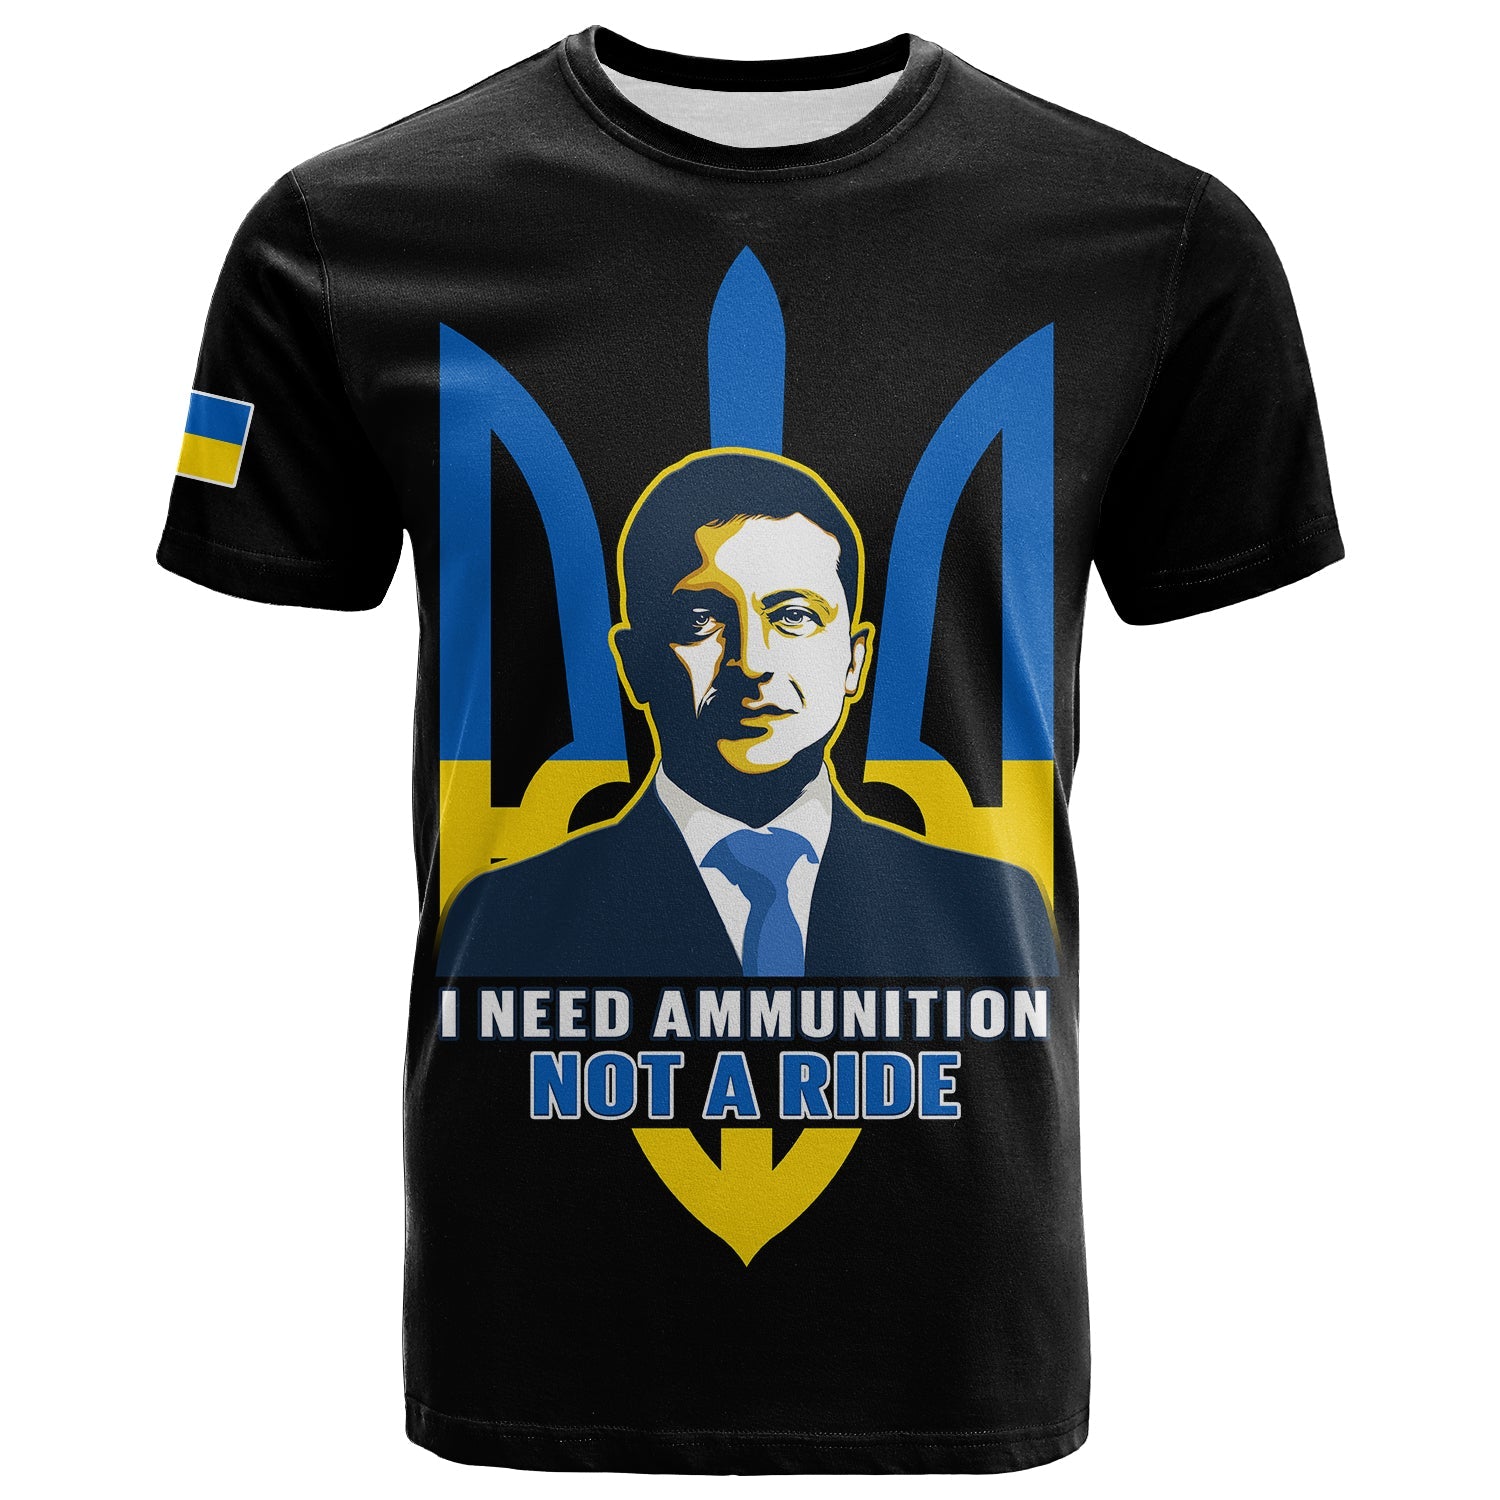 ukraine-t-shirt-ukrainian-president-i-need-ammunition-not-a-ride-black